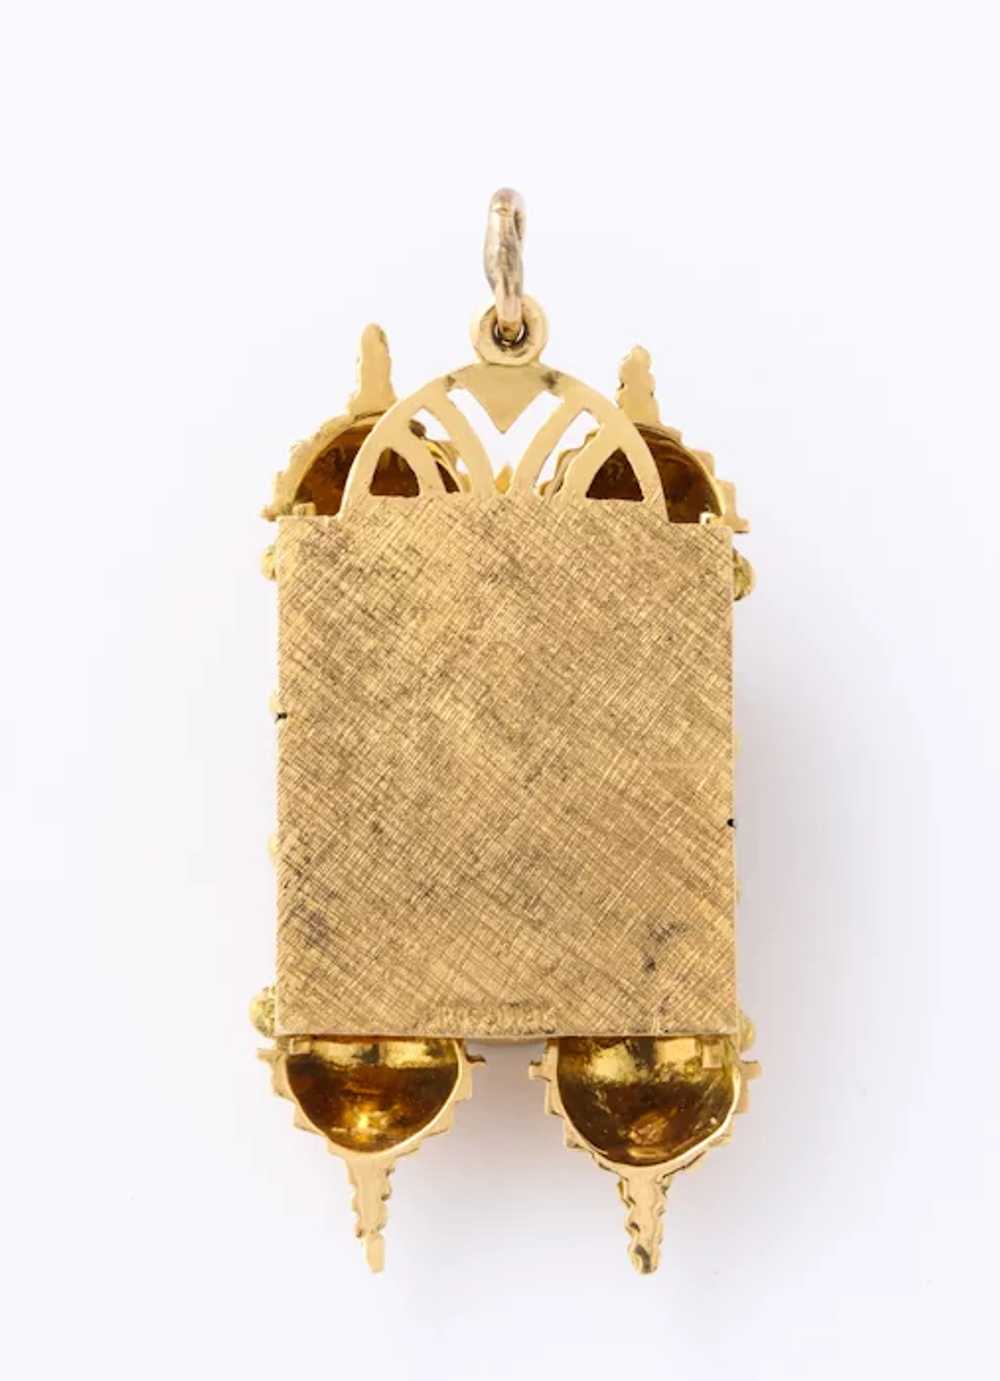 18kt. Gold Handmade Torah Pendant or Charm - image 8